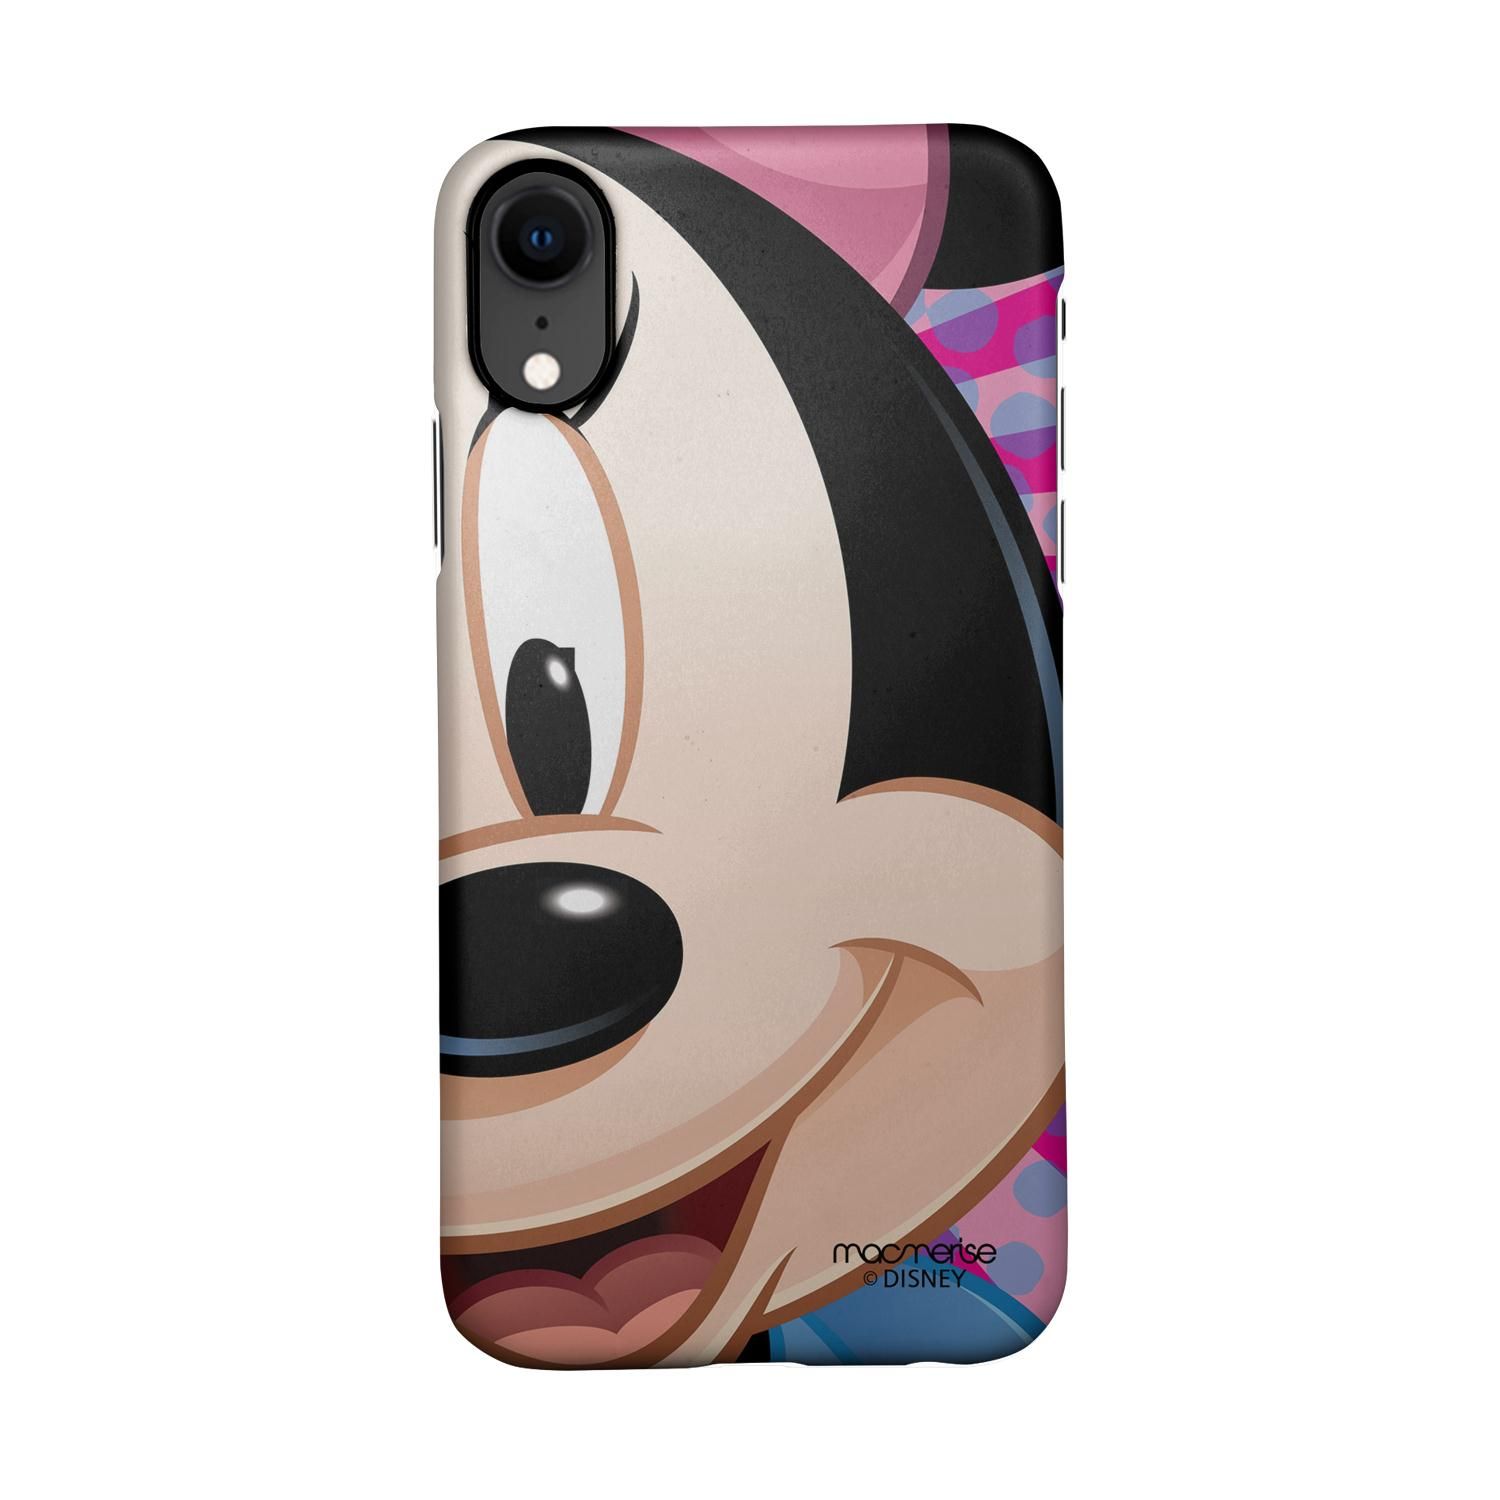 Buy Zoom Up Minnie - Sleek Phone Case for iPhone XR Online